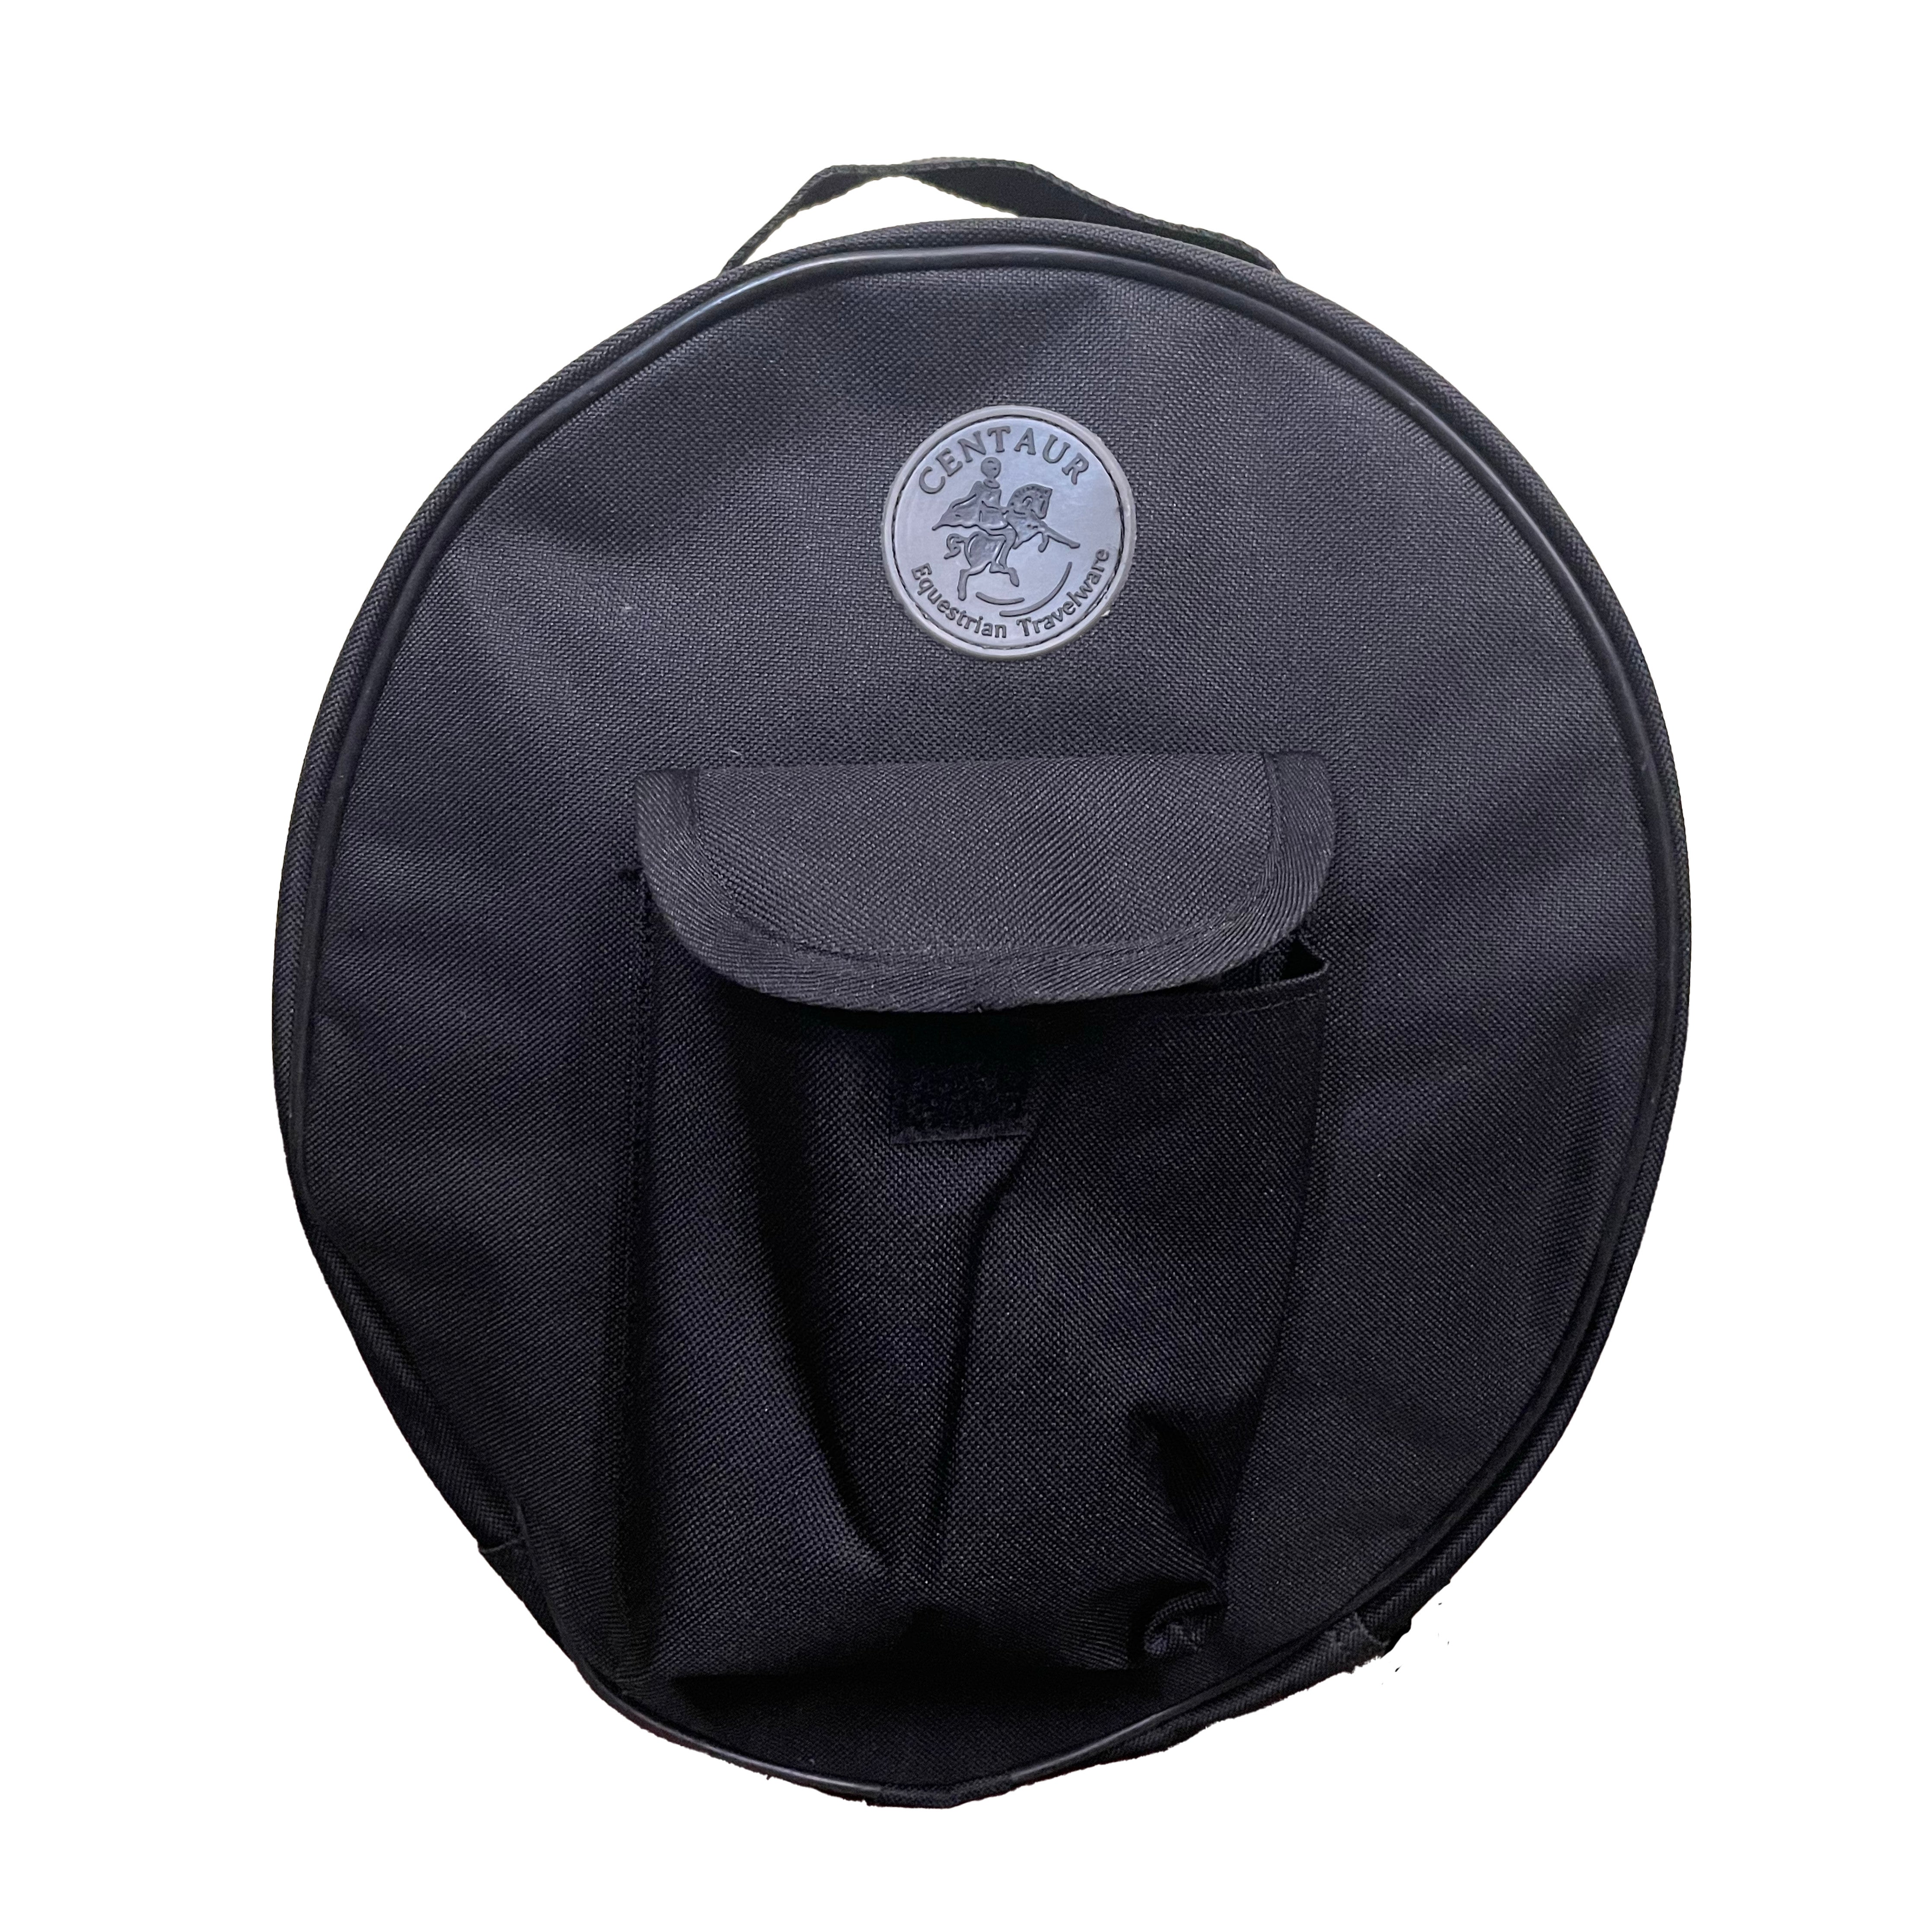 VSS Helmet Bag - Black Nylon w/ pocket